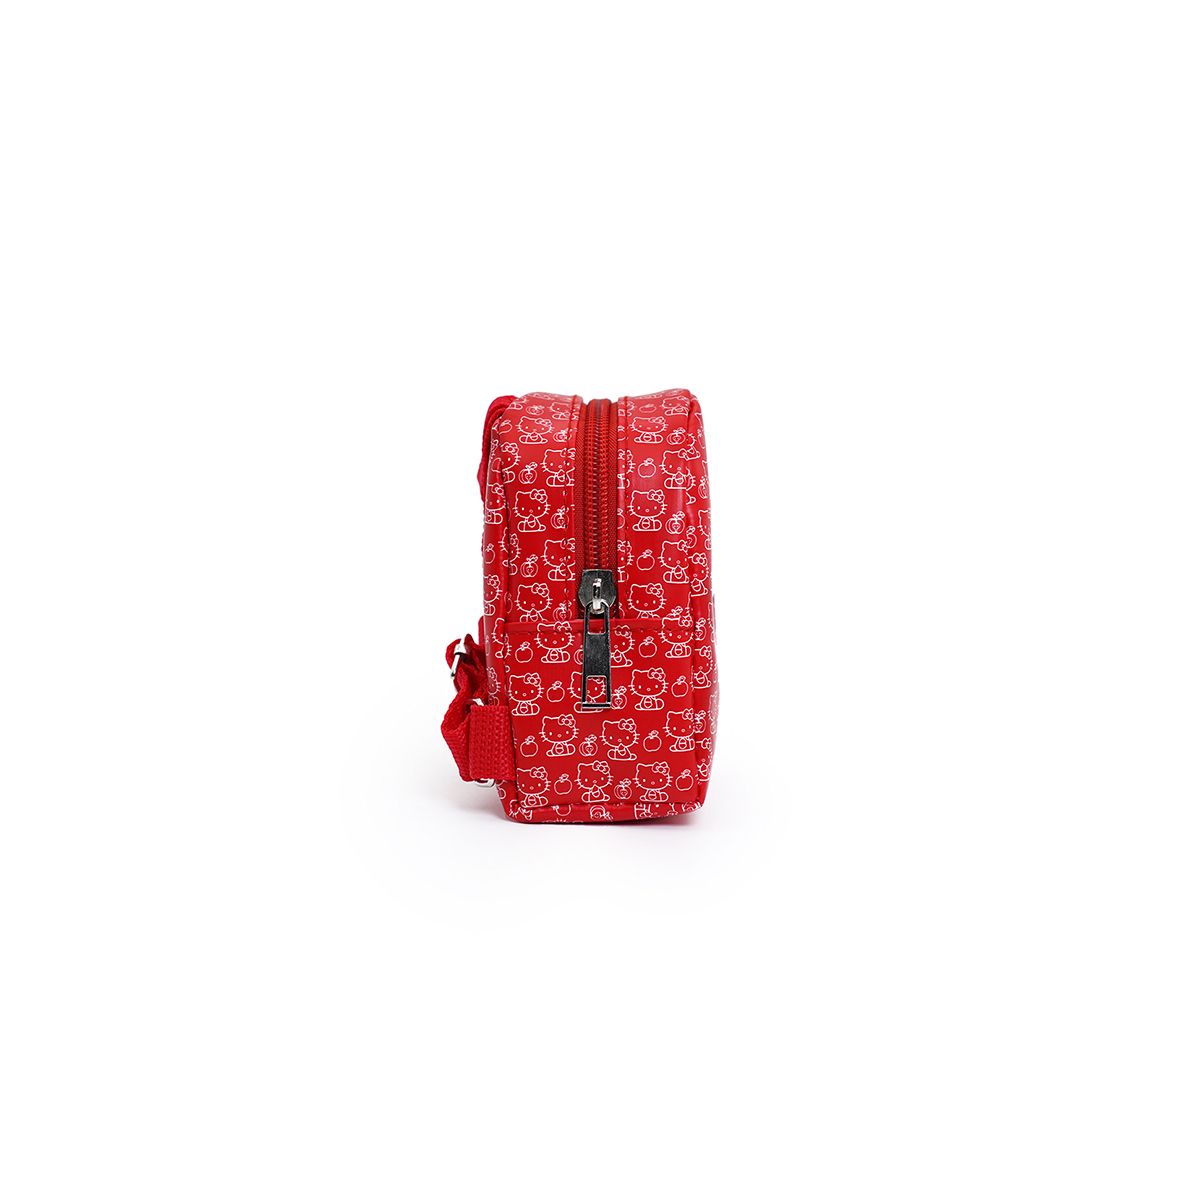 Коллекционная сумочка-сюрприз "Hello Kitty: Красная Китти", 12 см